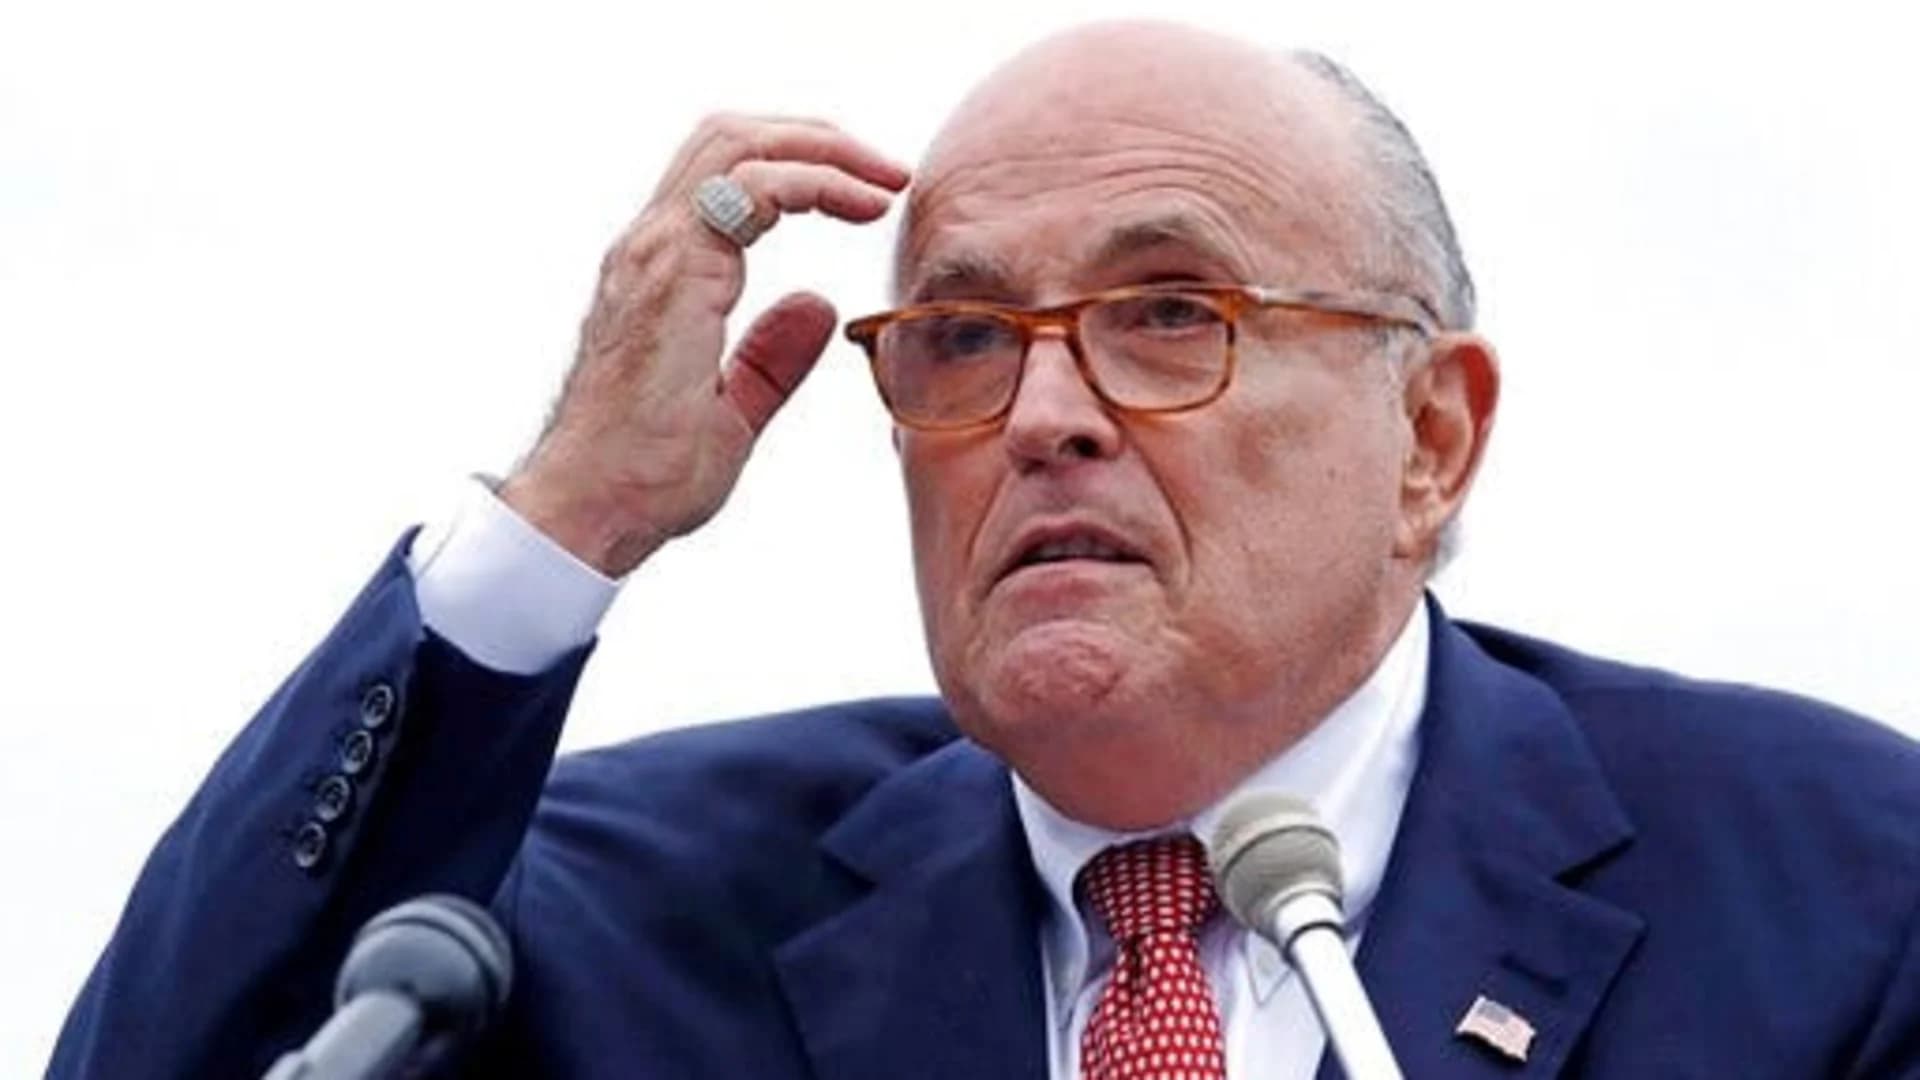 Giuliani faces subpoena for documents in impeachment probe